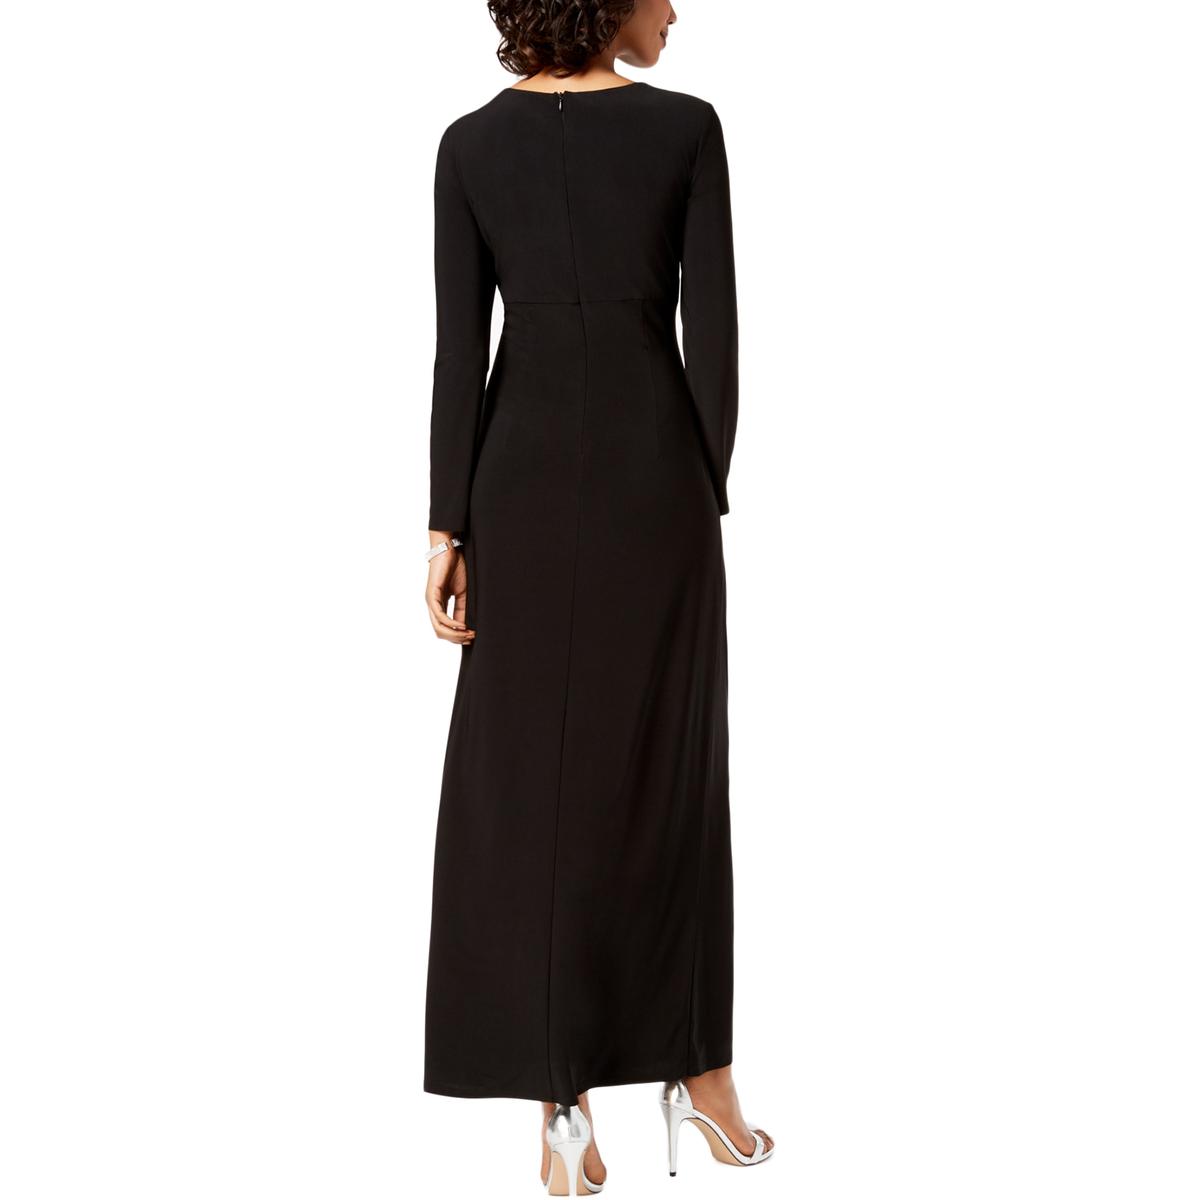 MSK Womens Black Knit Embellished Formal Evening Dress Gown 6 BHFO 9057 ...